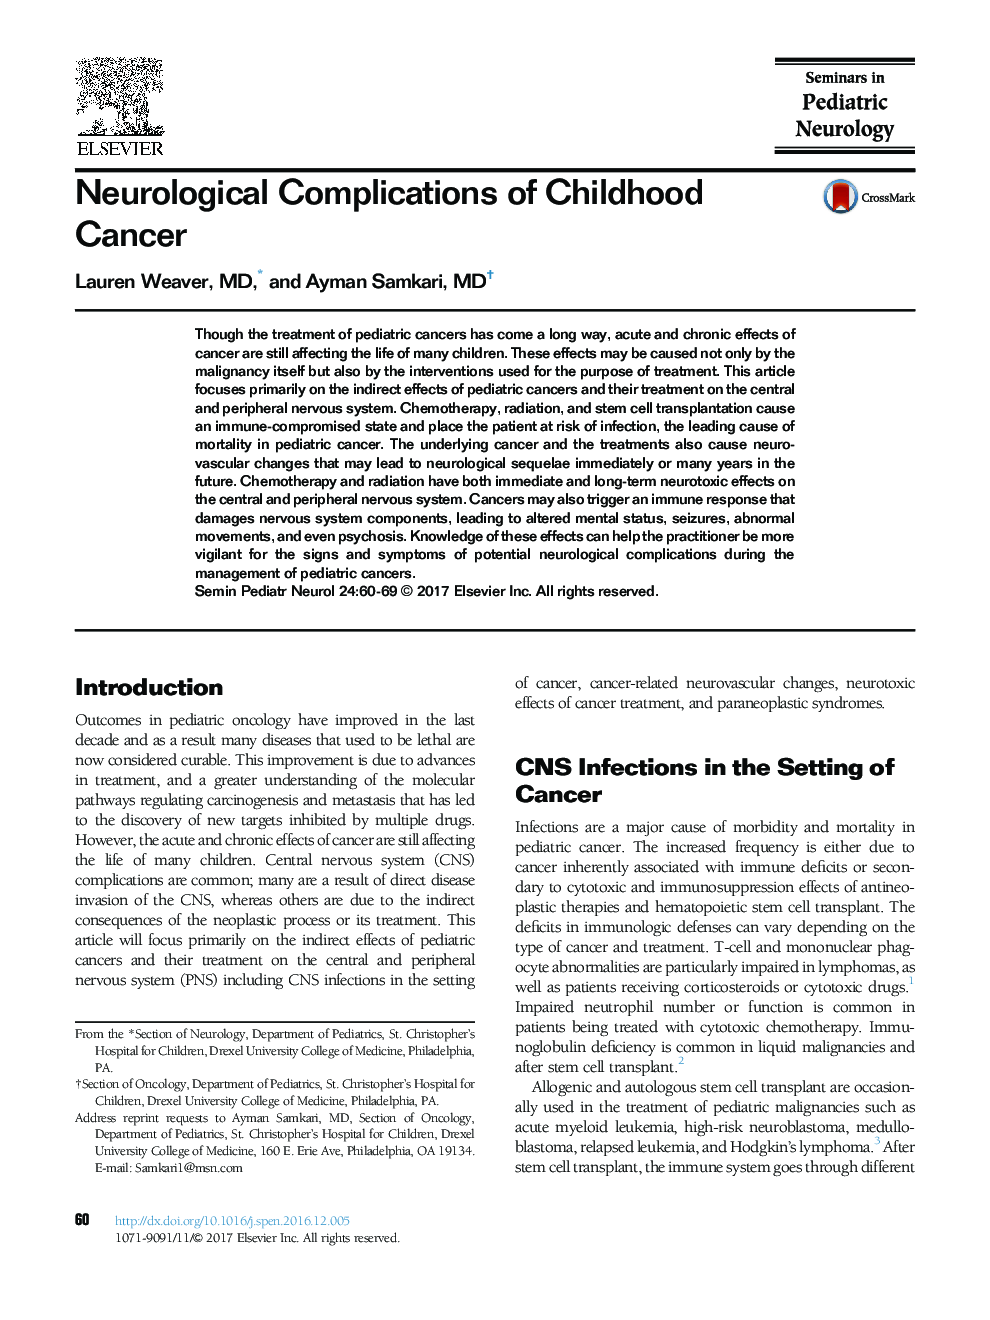 Neurological Complications of Childhood Cancer